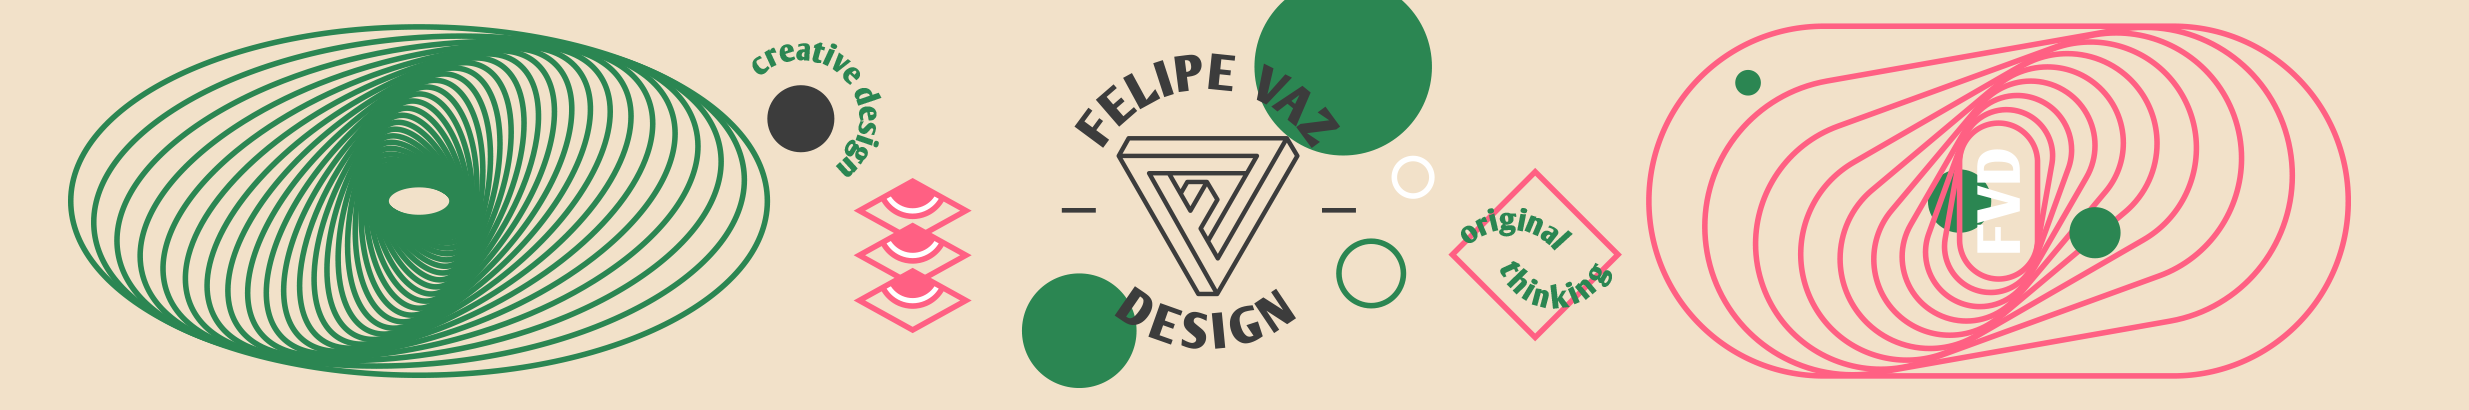 Banner de perfil de Felipe Vaz Design